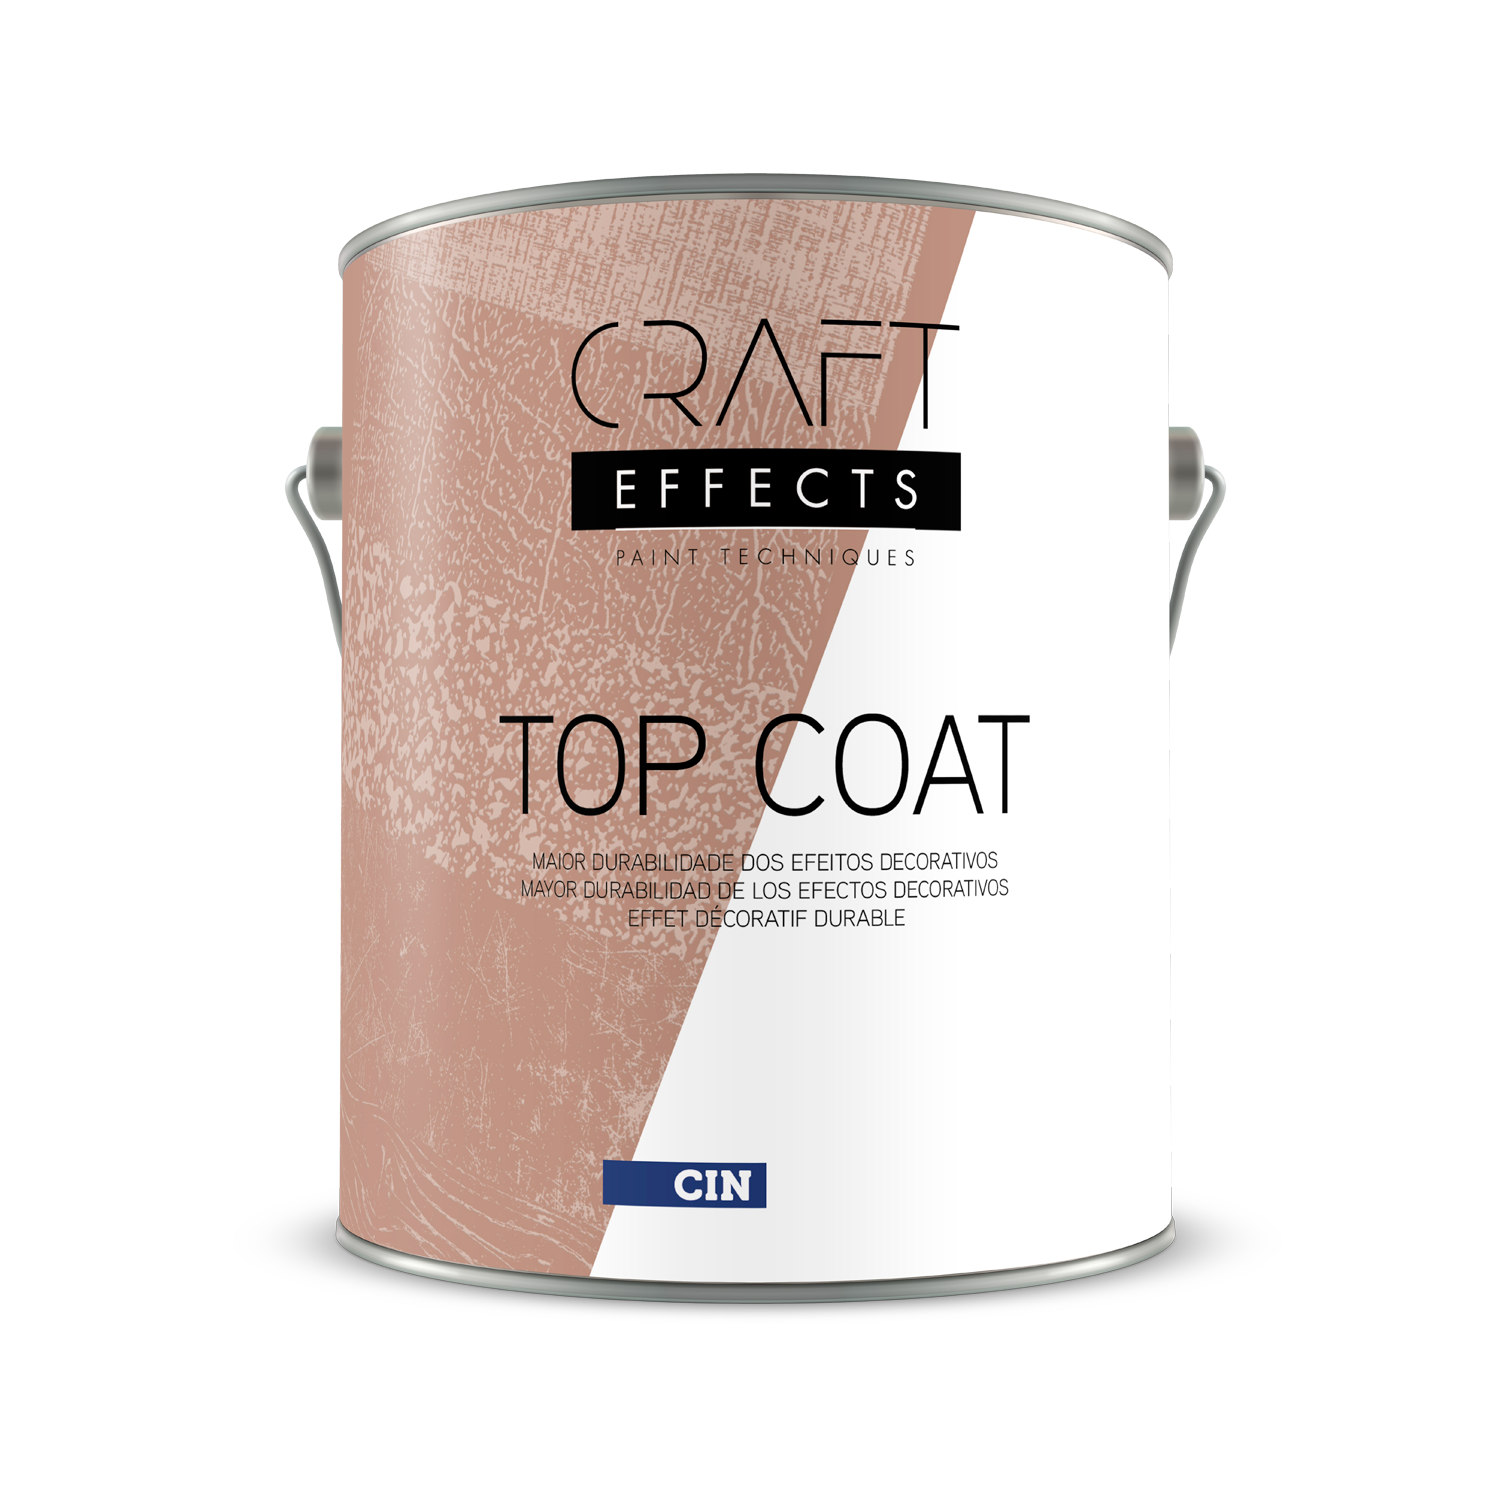 Craft Effects Top Coat